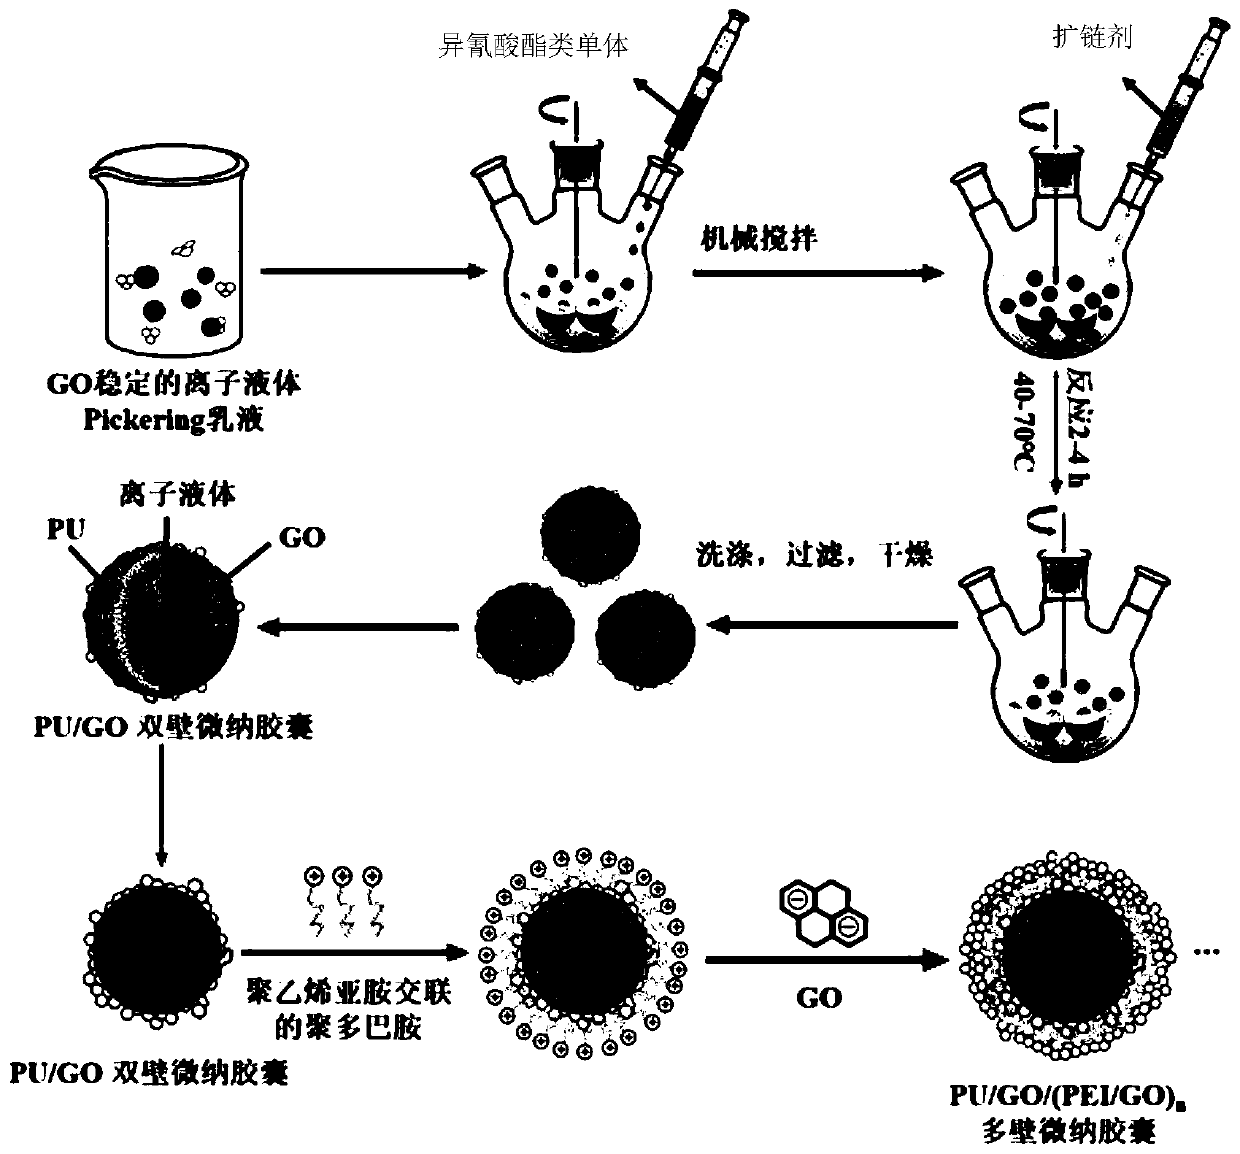 Graphene oxide hybrid multi-wall self-lubricating micro-nano capsule and preparation method thereof